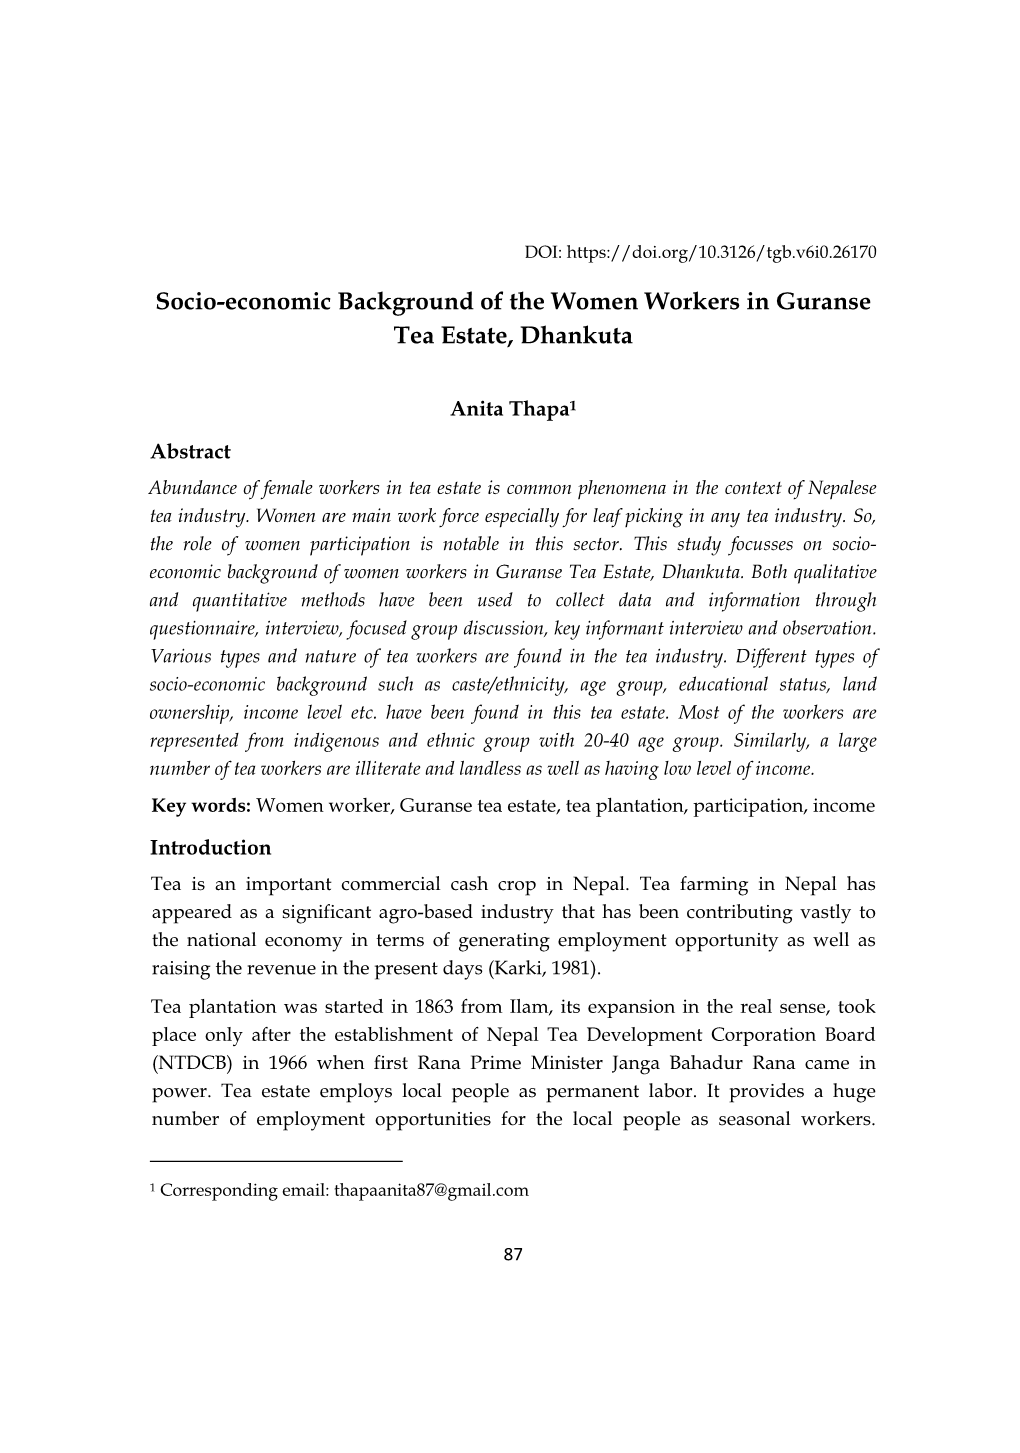 Socio-Economic Background of the Women Workers in Guranse Tea Estate, Dhankuta